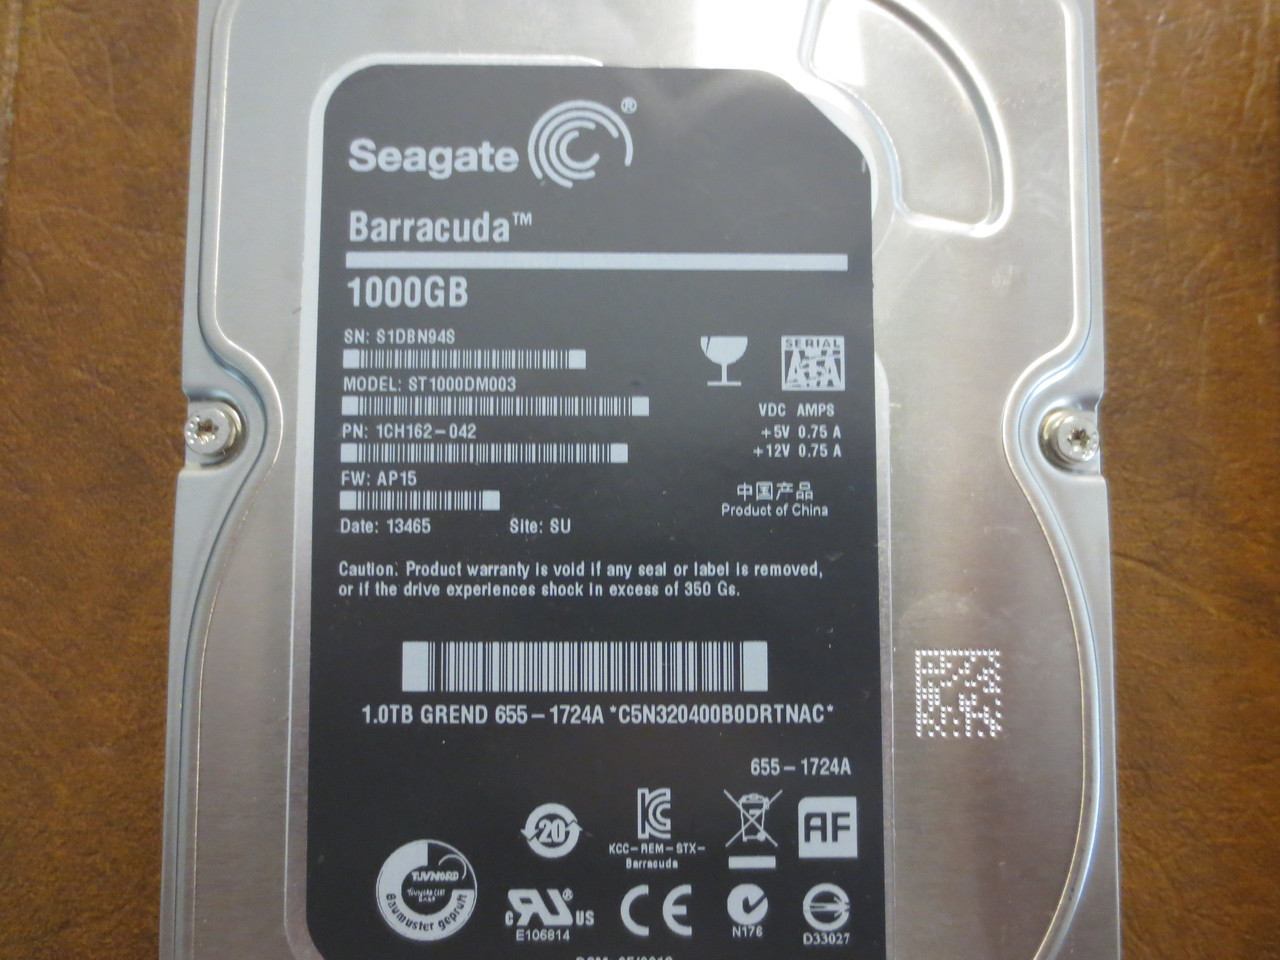 Seagate ST1000DM003 1CH162-042 FW:AP15 SU Apple#655-1742A 1.0TB Sata -  Effective Electronics